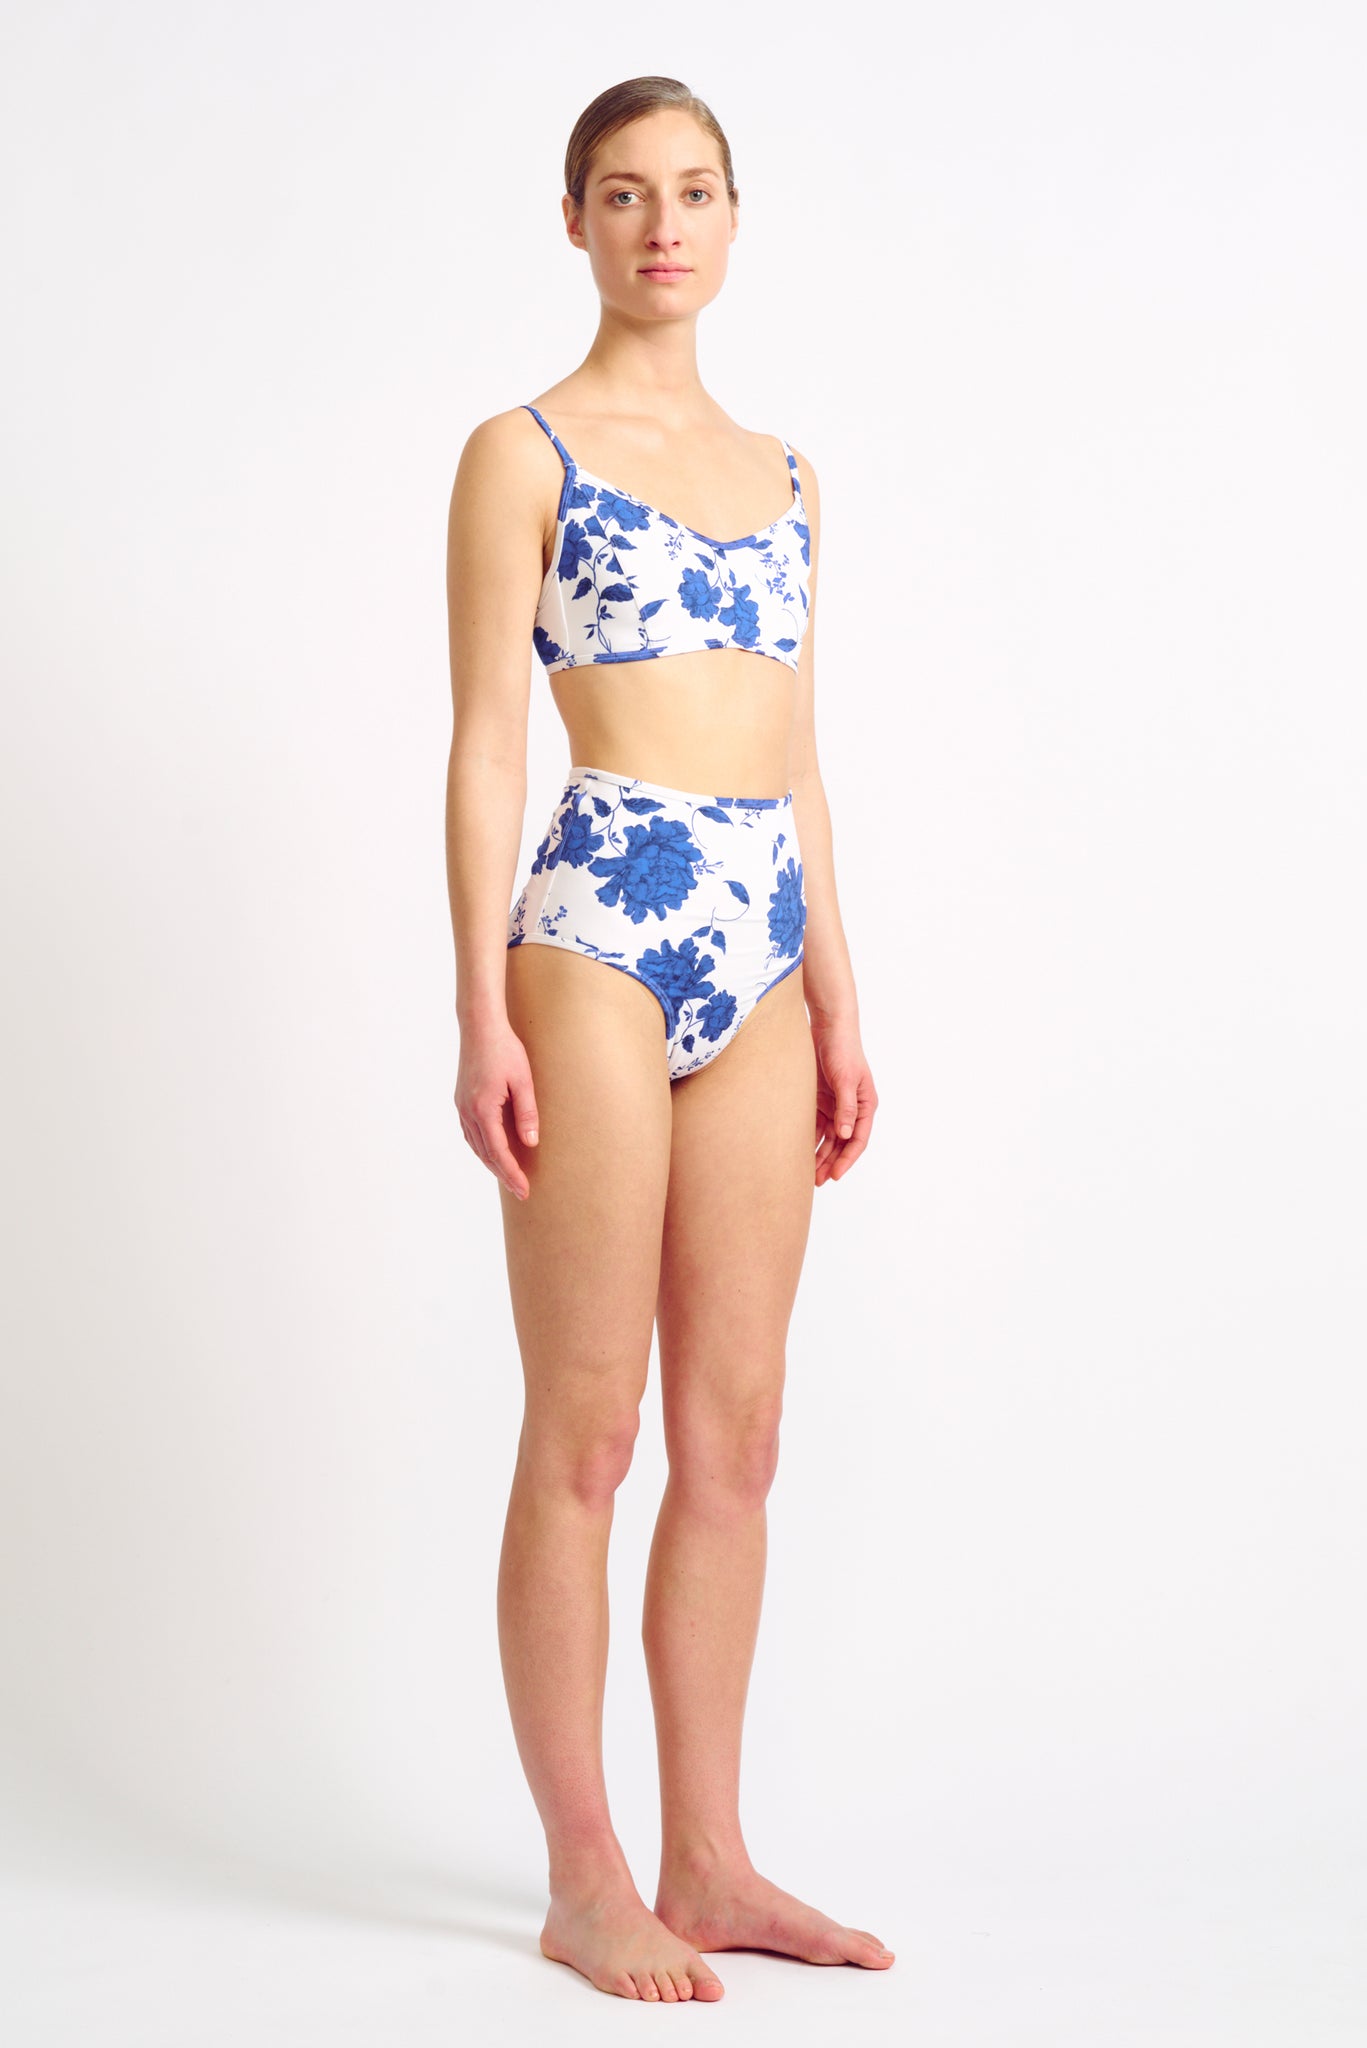 ALSLIAO Womens Bra Pieces Bikini Swimsuit Print Filled Floral Print White  Bikini Blue L 